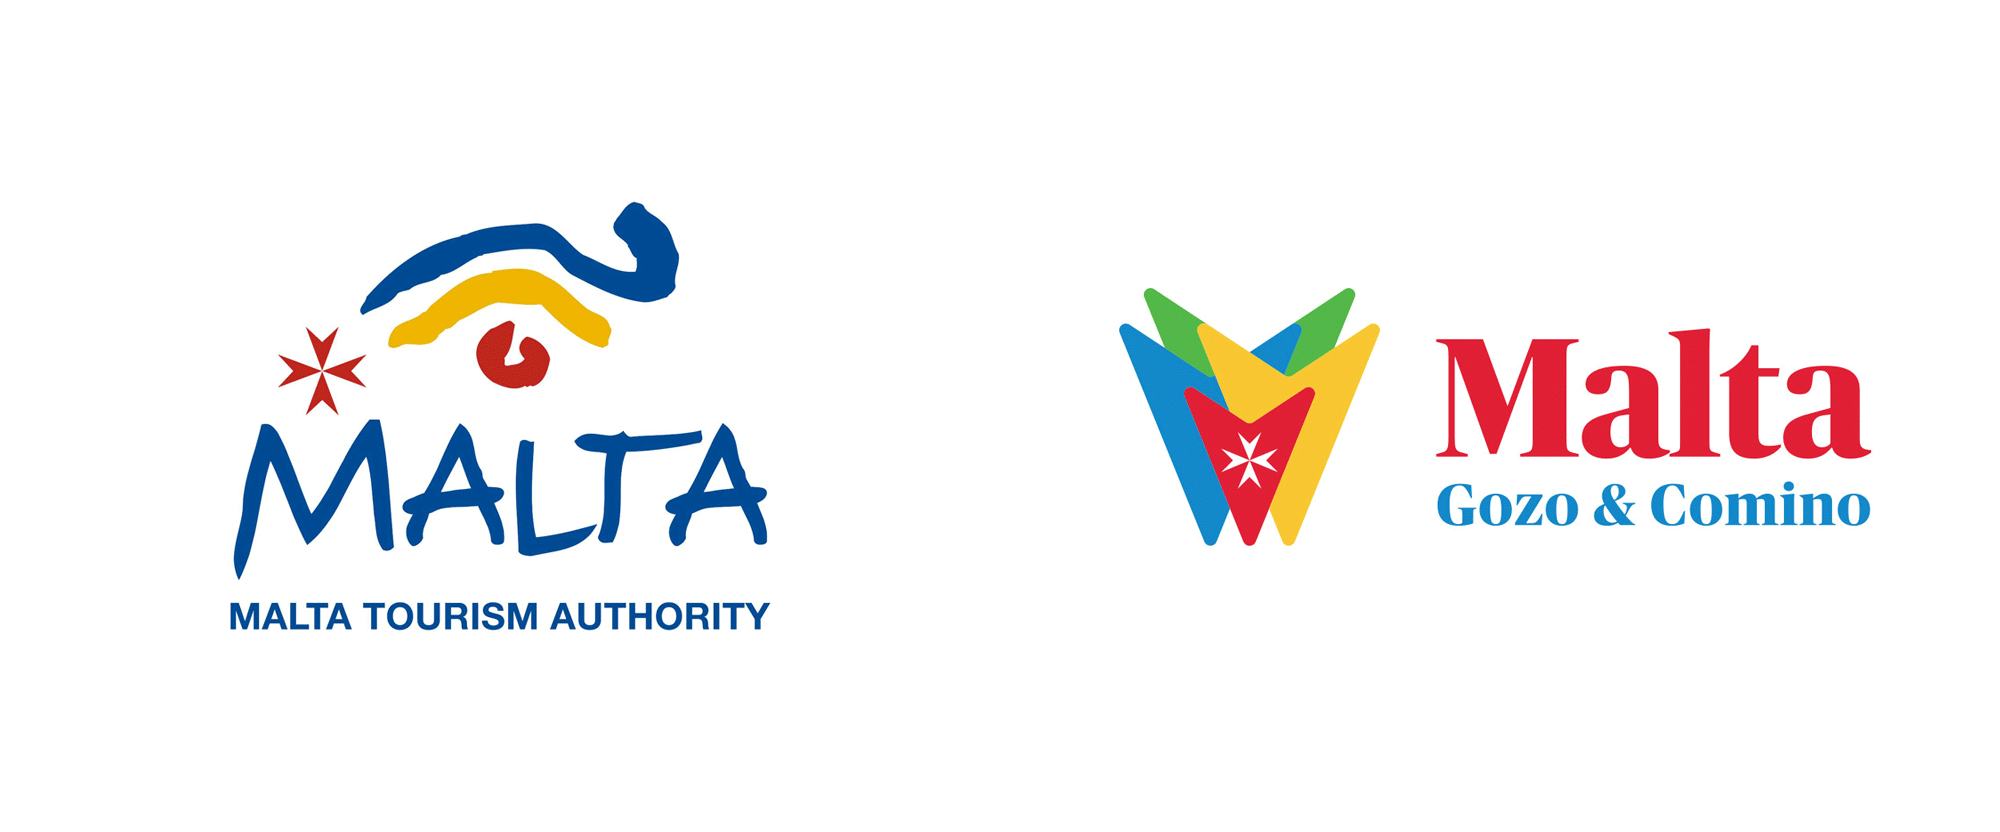 Malta Logo - Brand New: New Logo and Identity for Malta by OLIVER